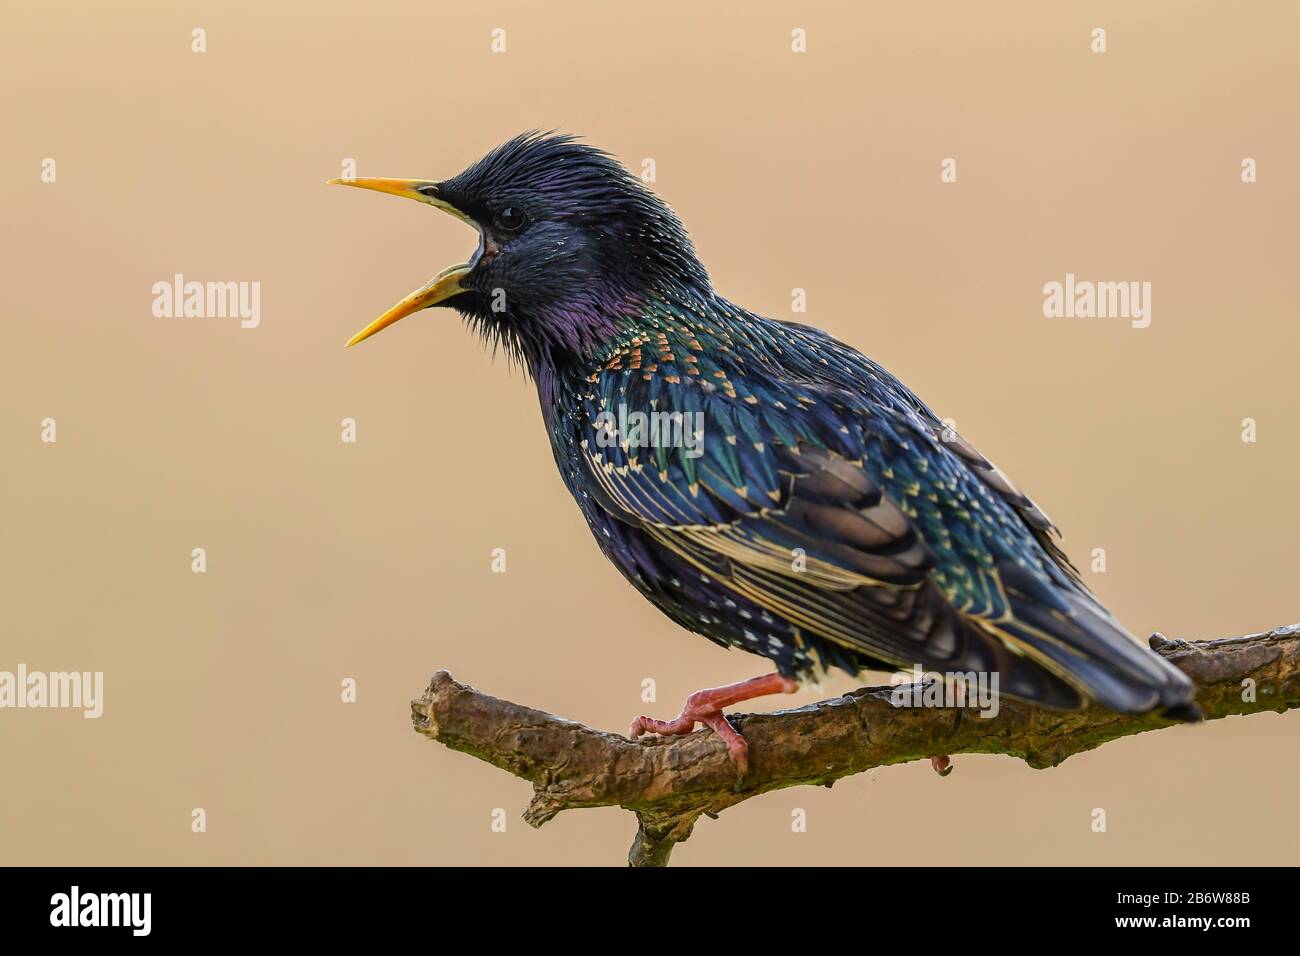 Europea - Starling Sturnus vulgaris, bella palissonatrice comune uccelli dai giardini europei e foreste, Hortobaby National Park, Ungheria. Foto Stock